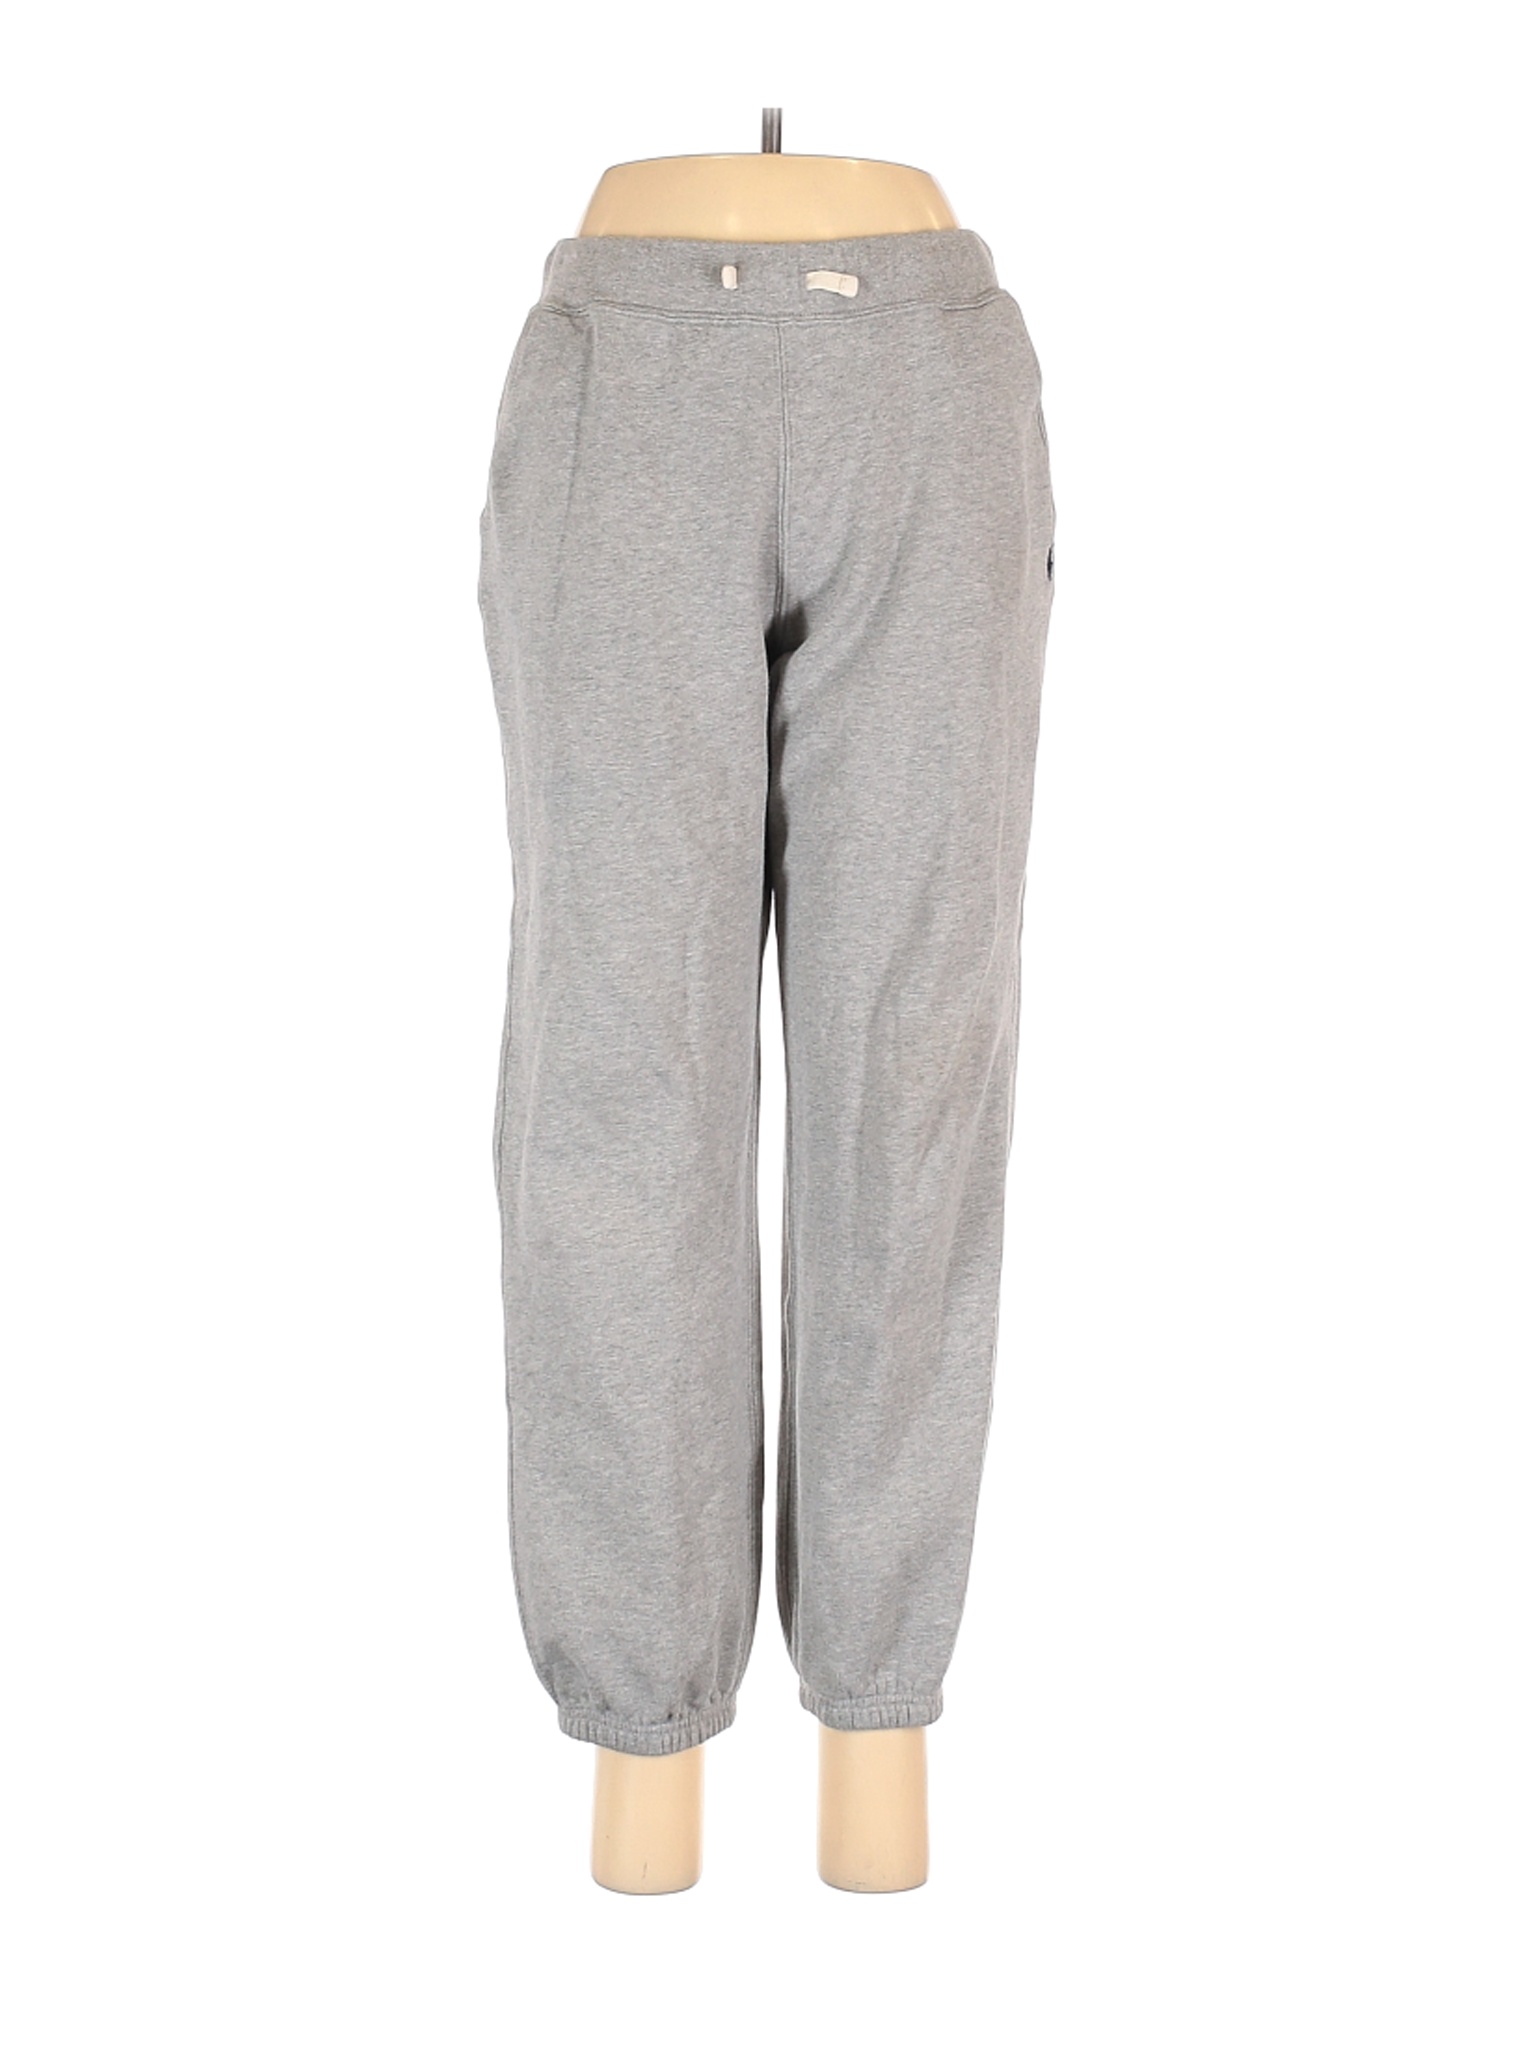 Polo by Ralph Lauren Women Gray Sweatpants XL | eBay